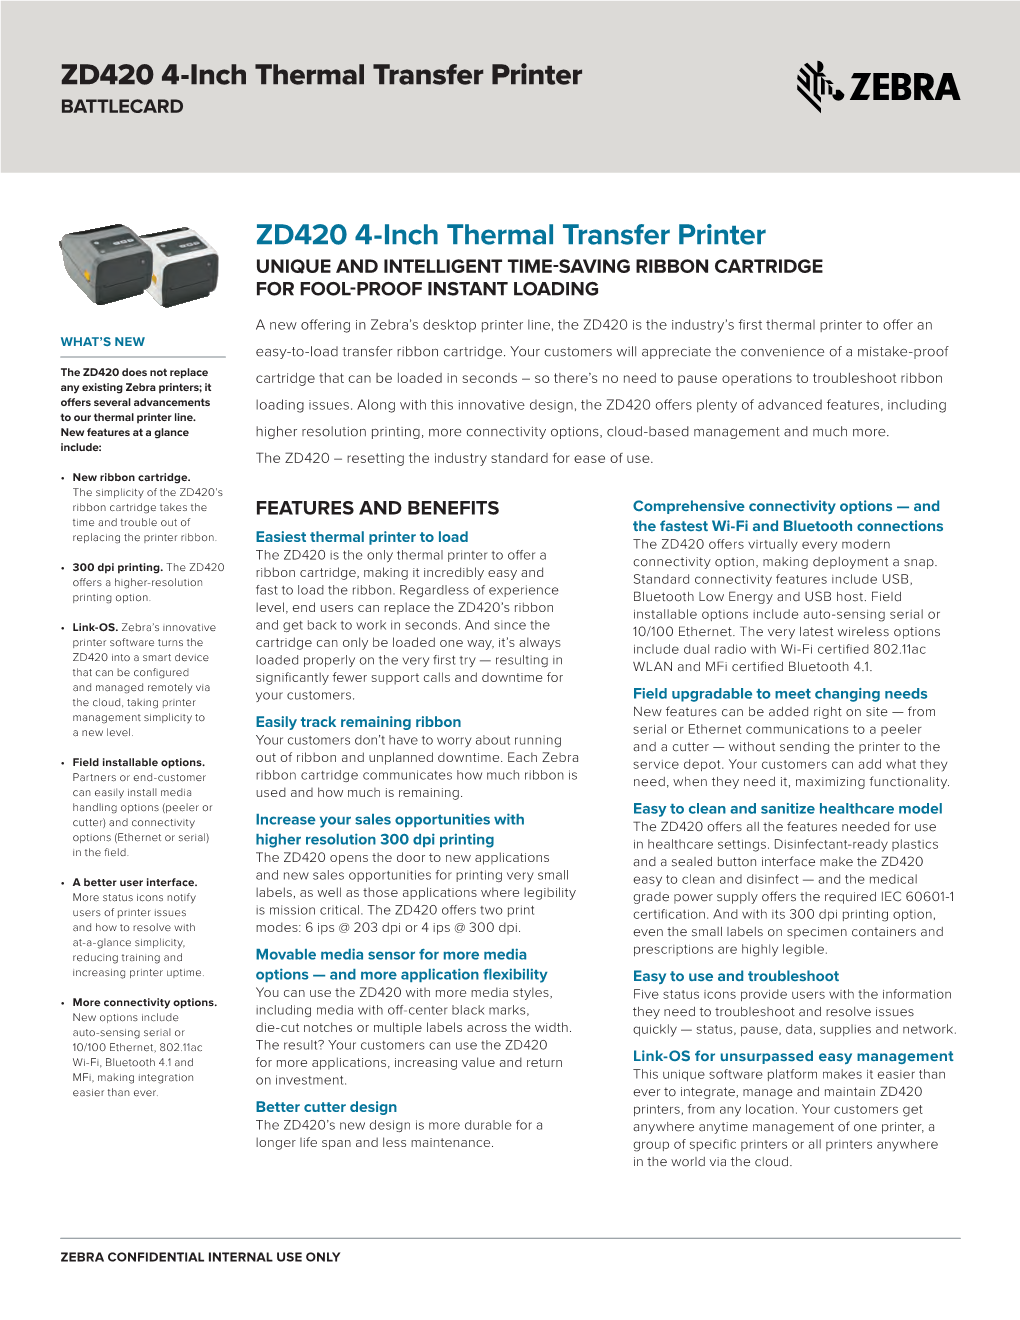 ZD420 4-Inch Thermal Transfer Printer Battlecard